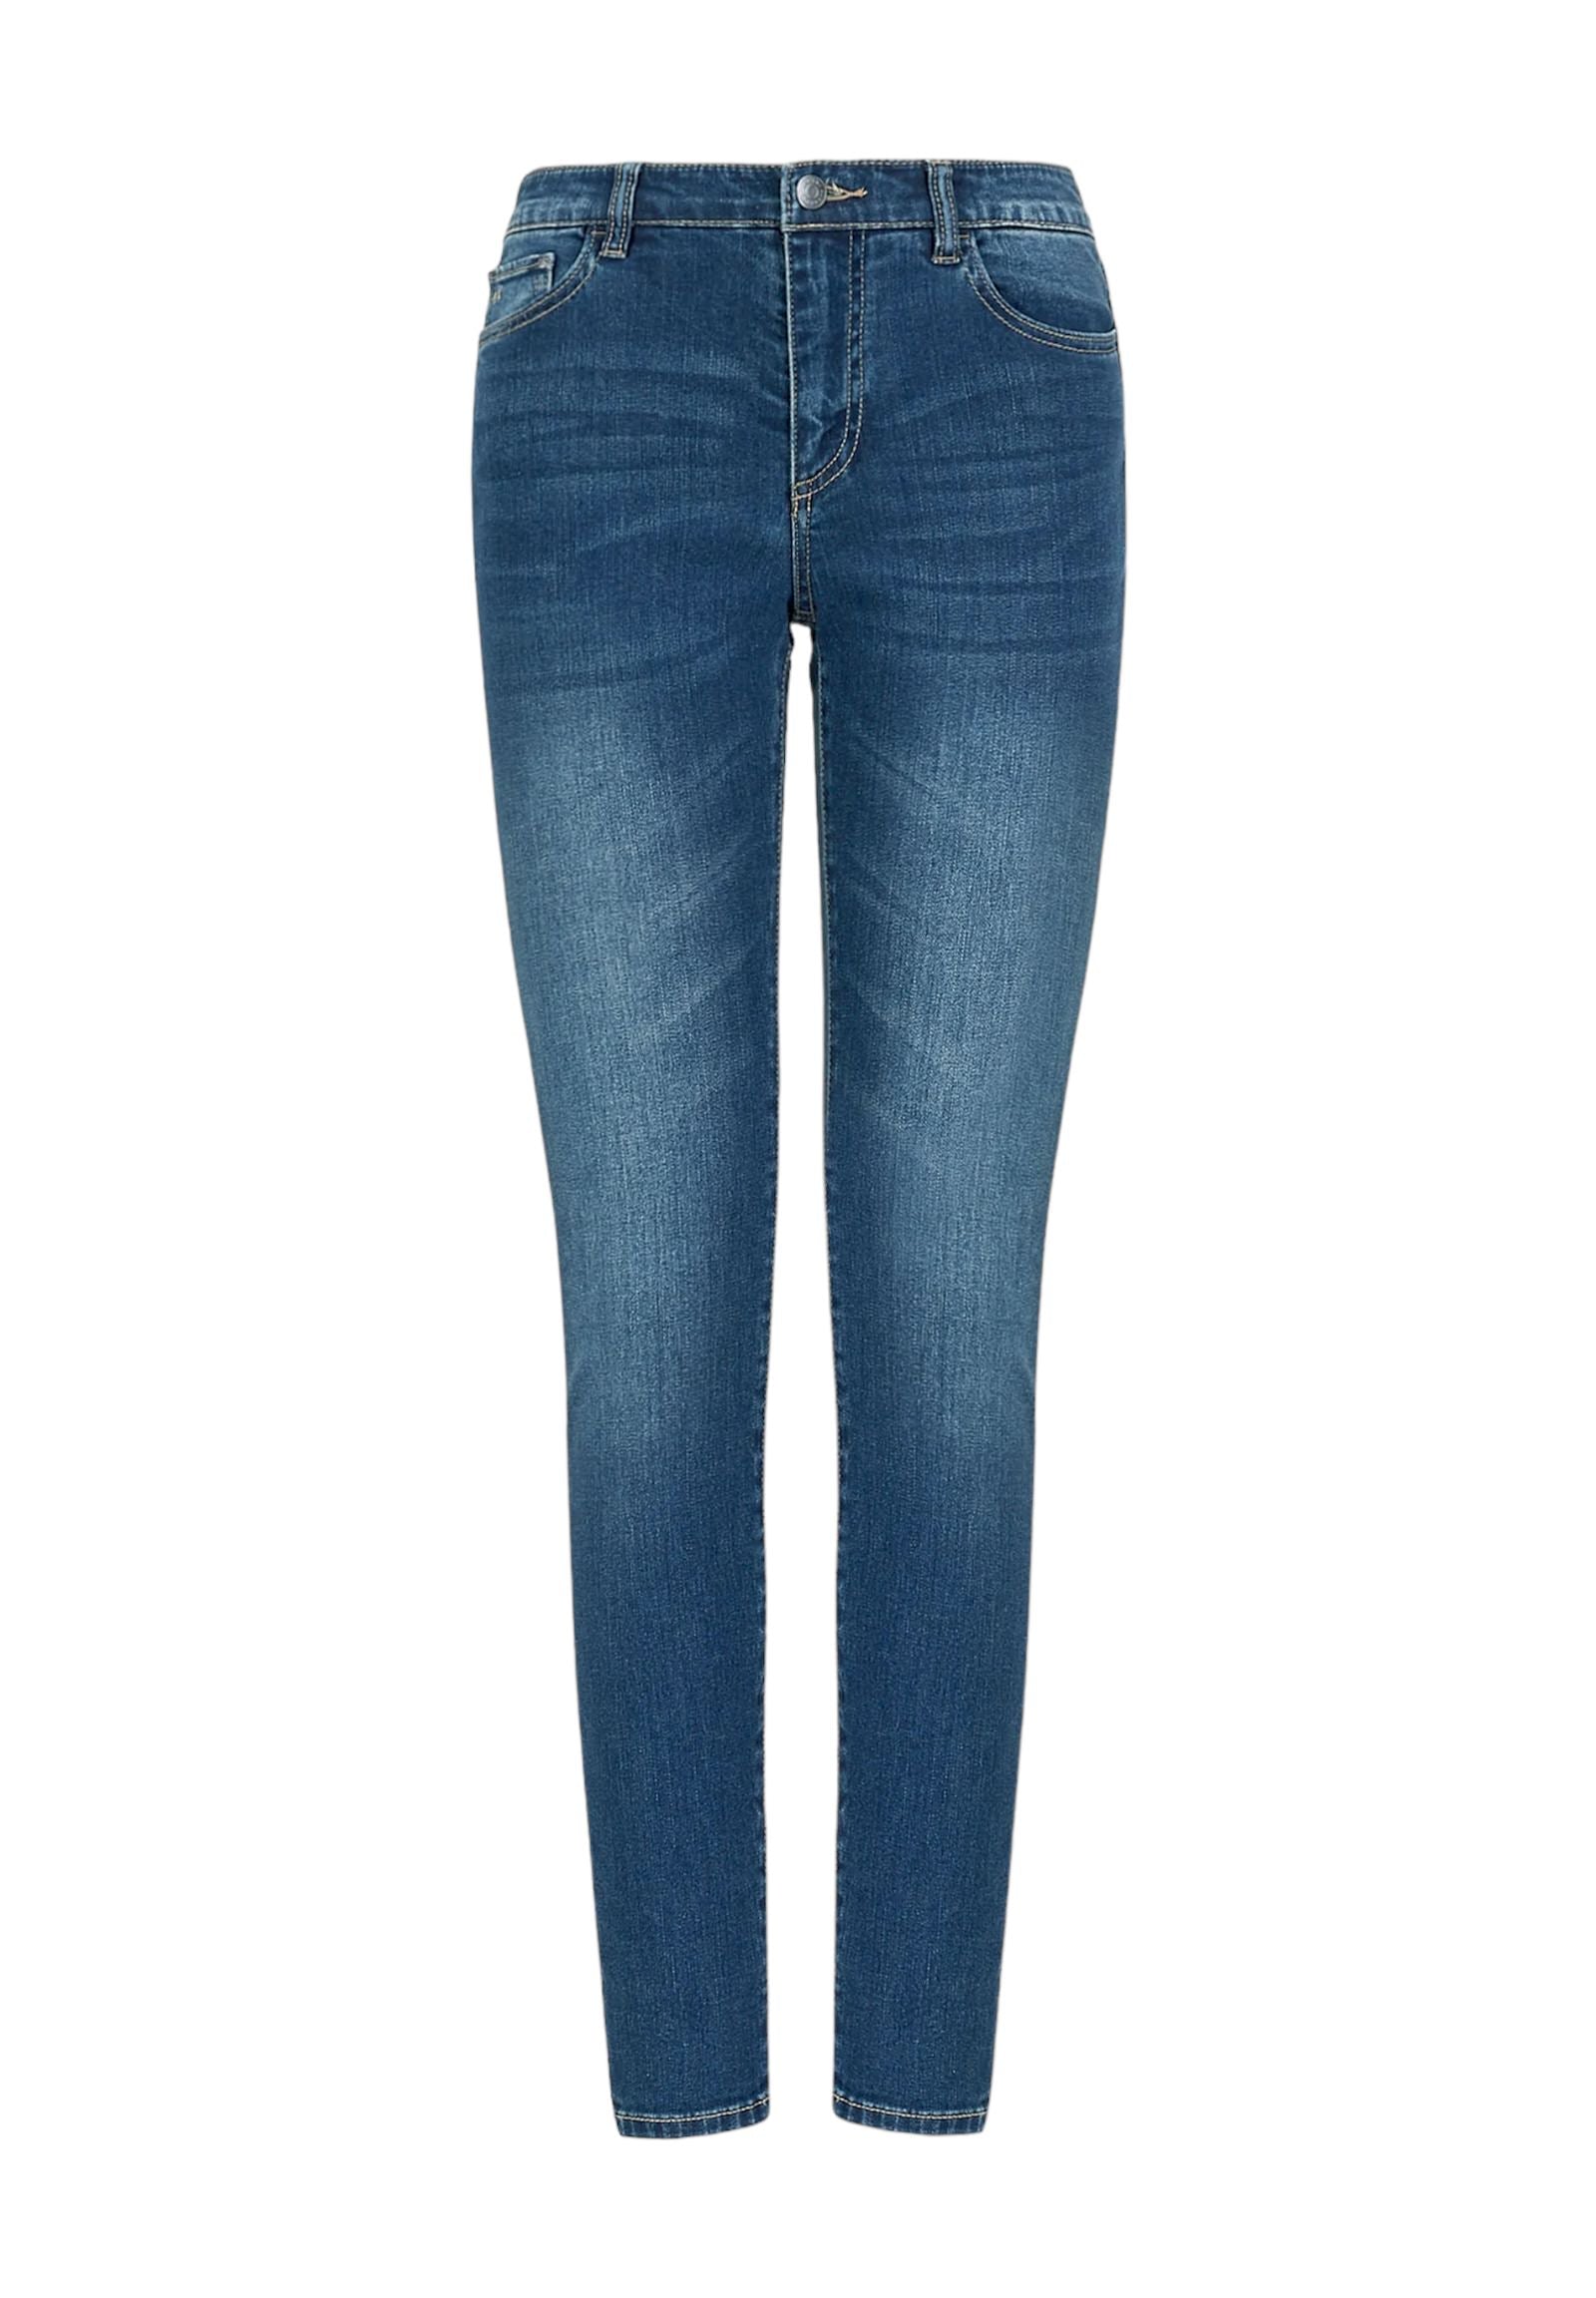 Armani Exchange Jeans 8nyj01 Indigo Denim